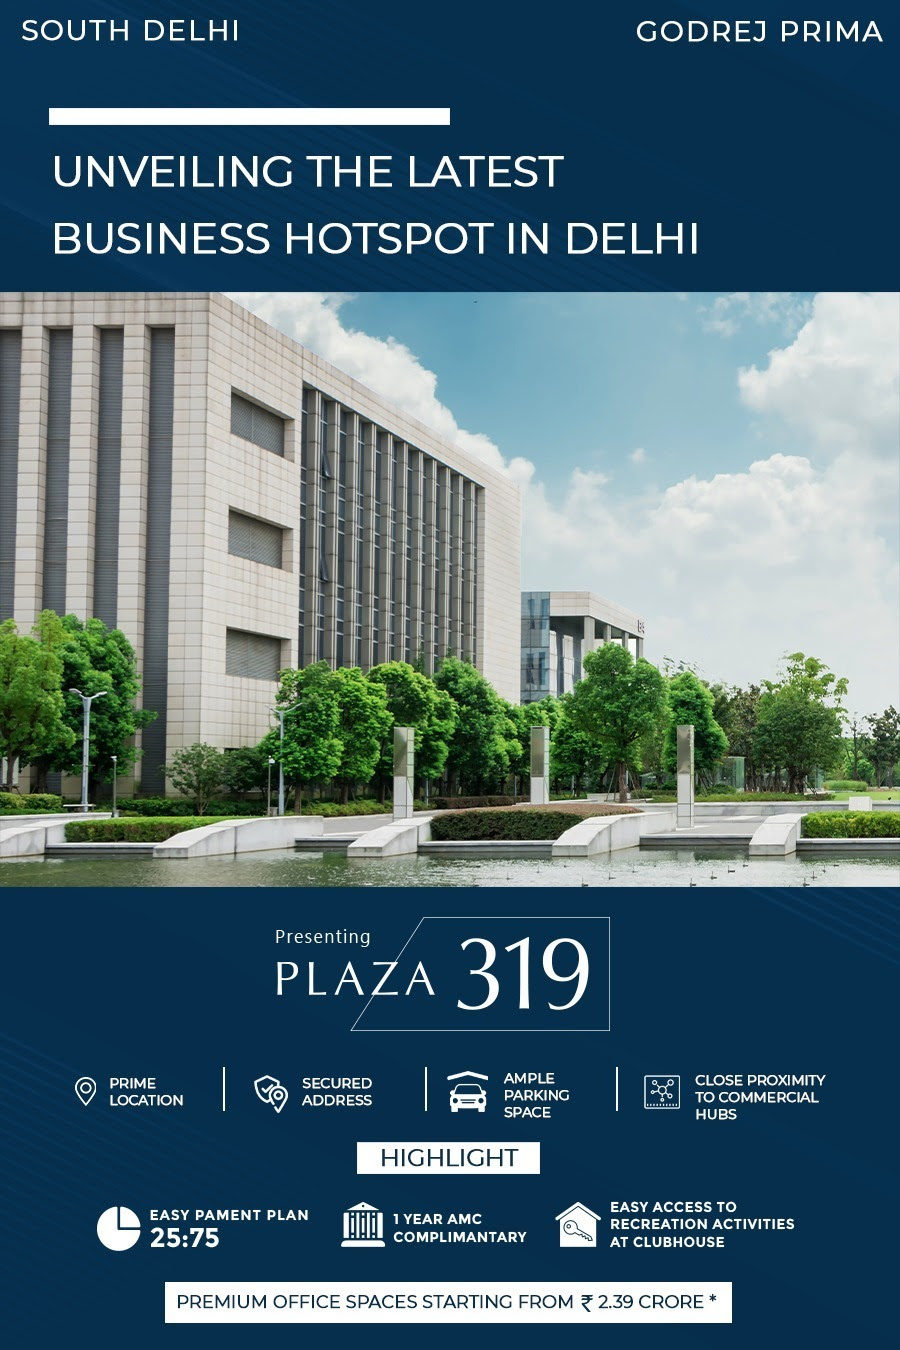 Godrej Plaza 319 Presenting unveiling the latest business hotspot in Delhi Update